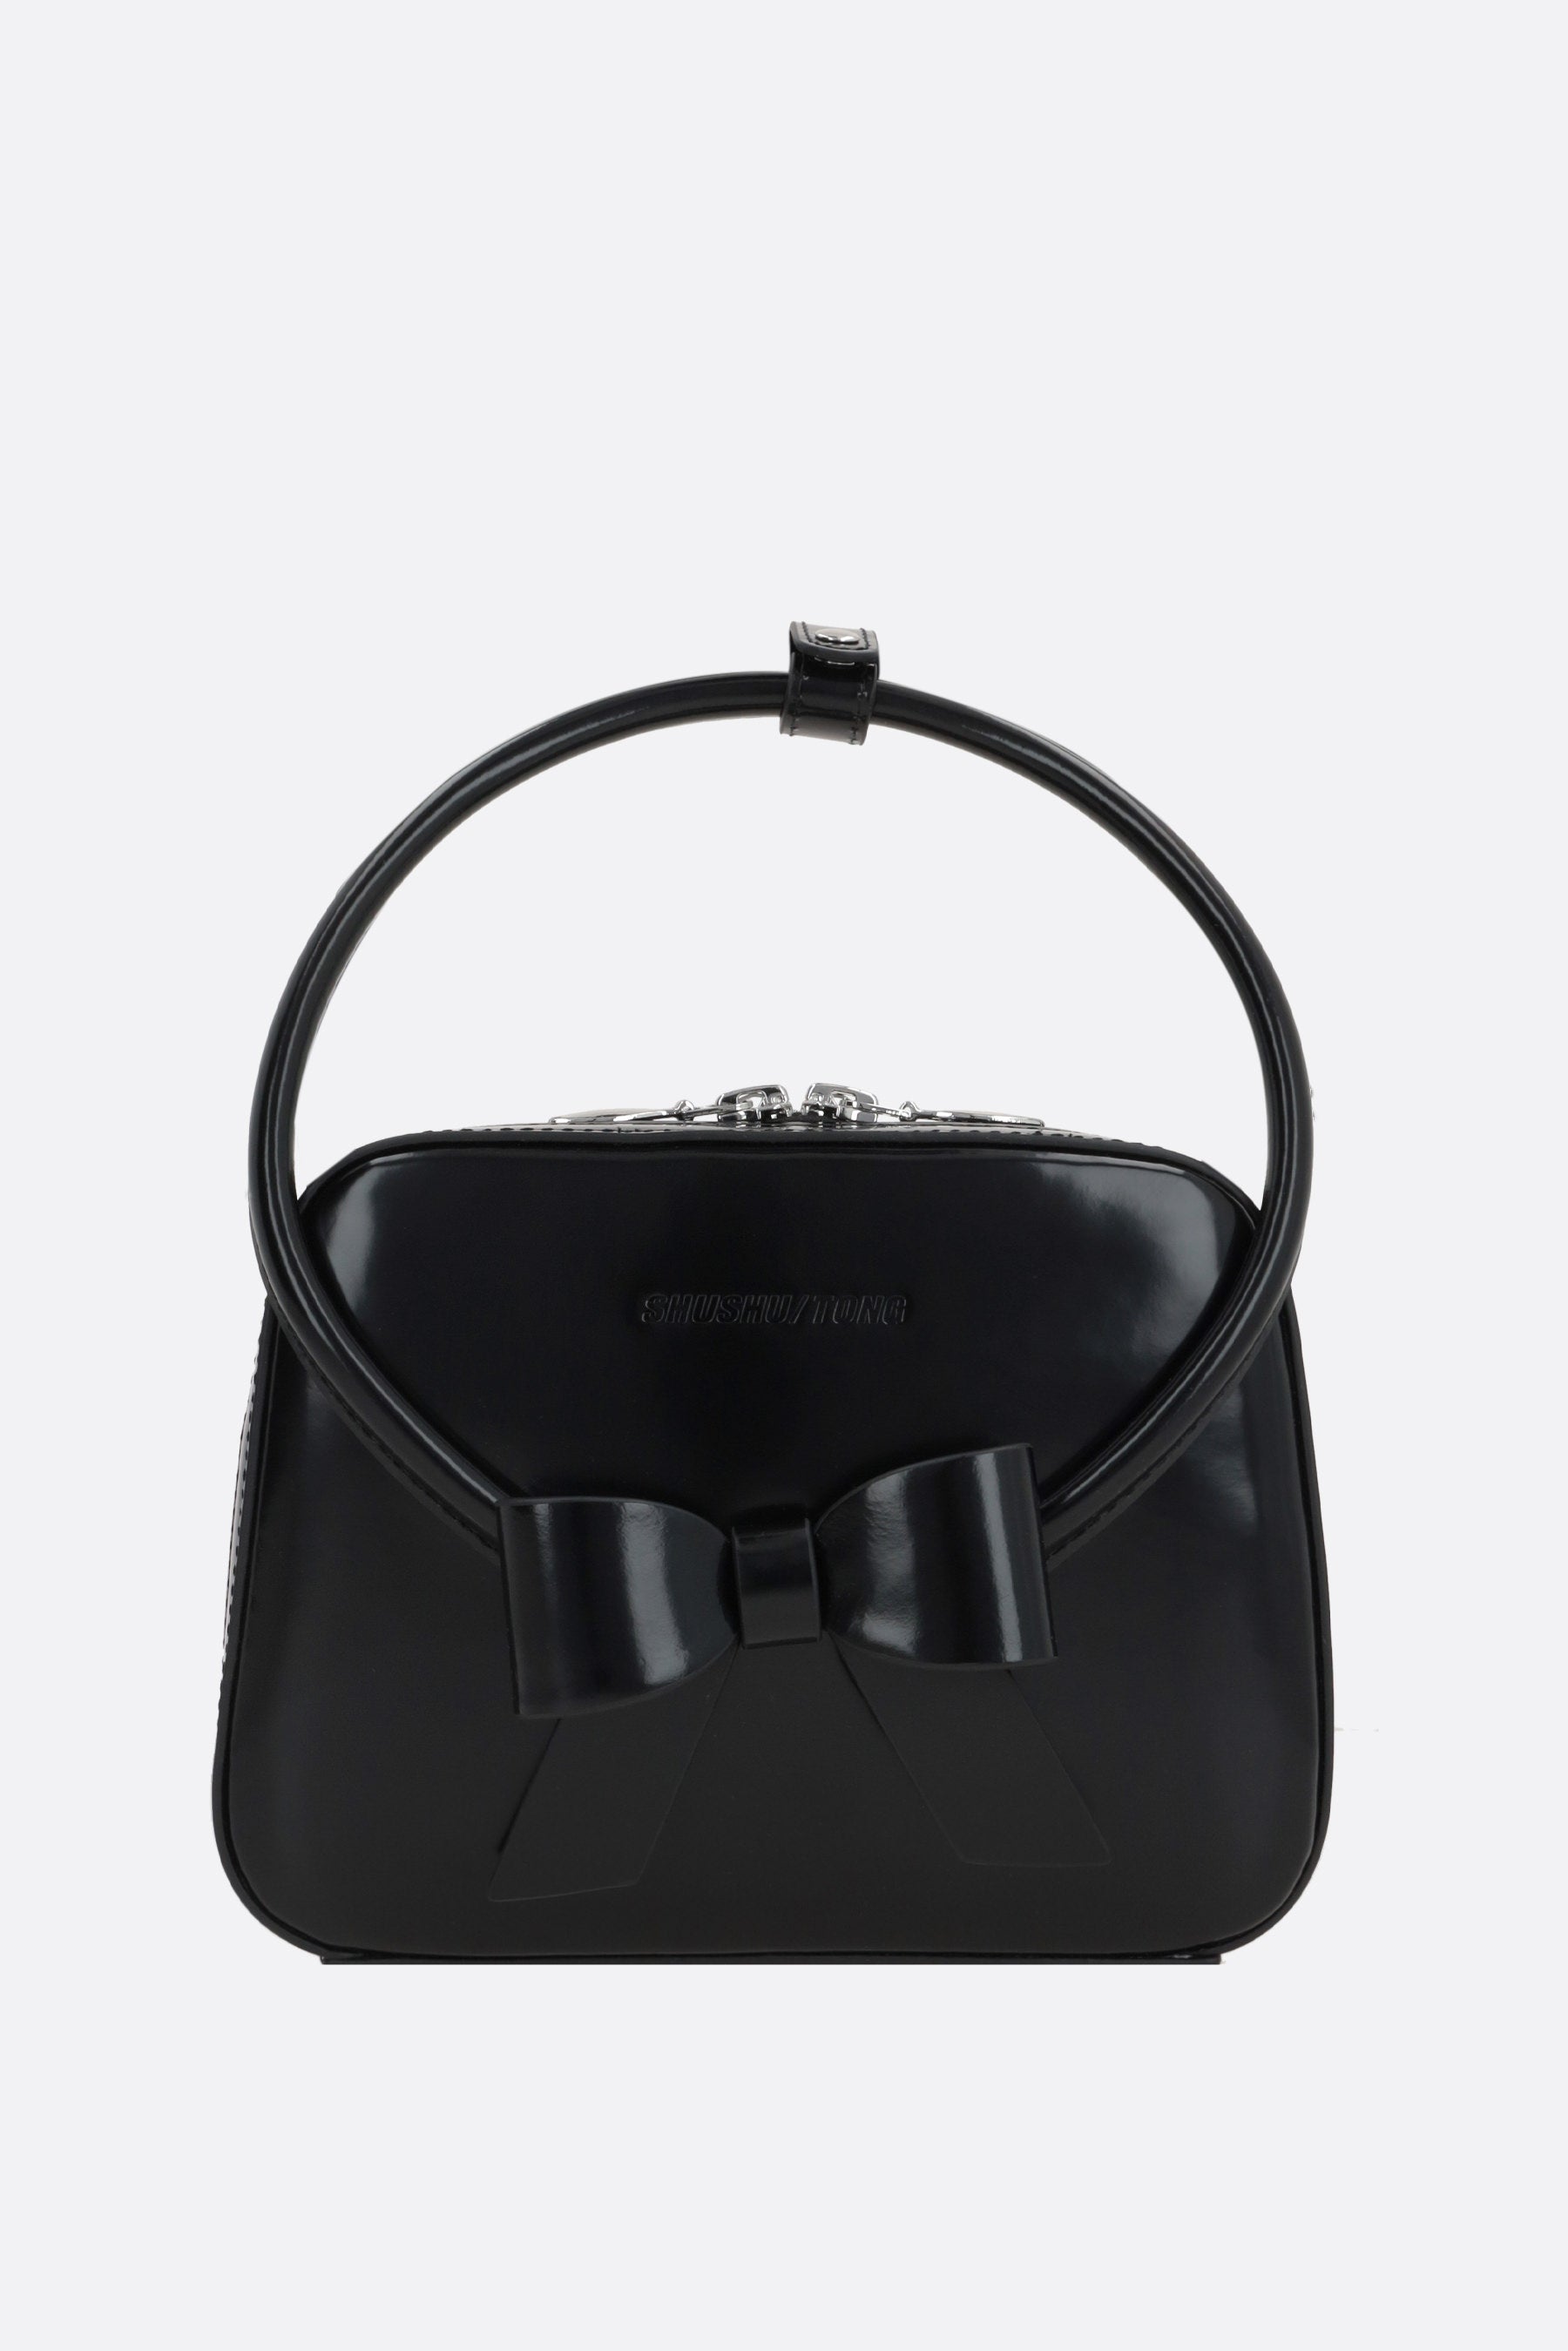 Stereo Bow brushed leather handbag